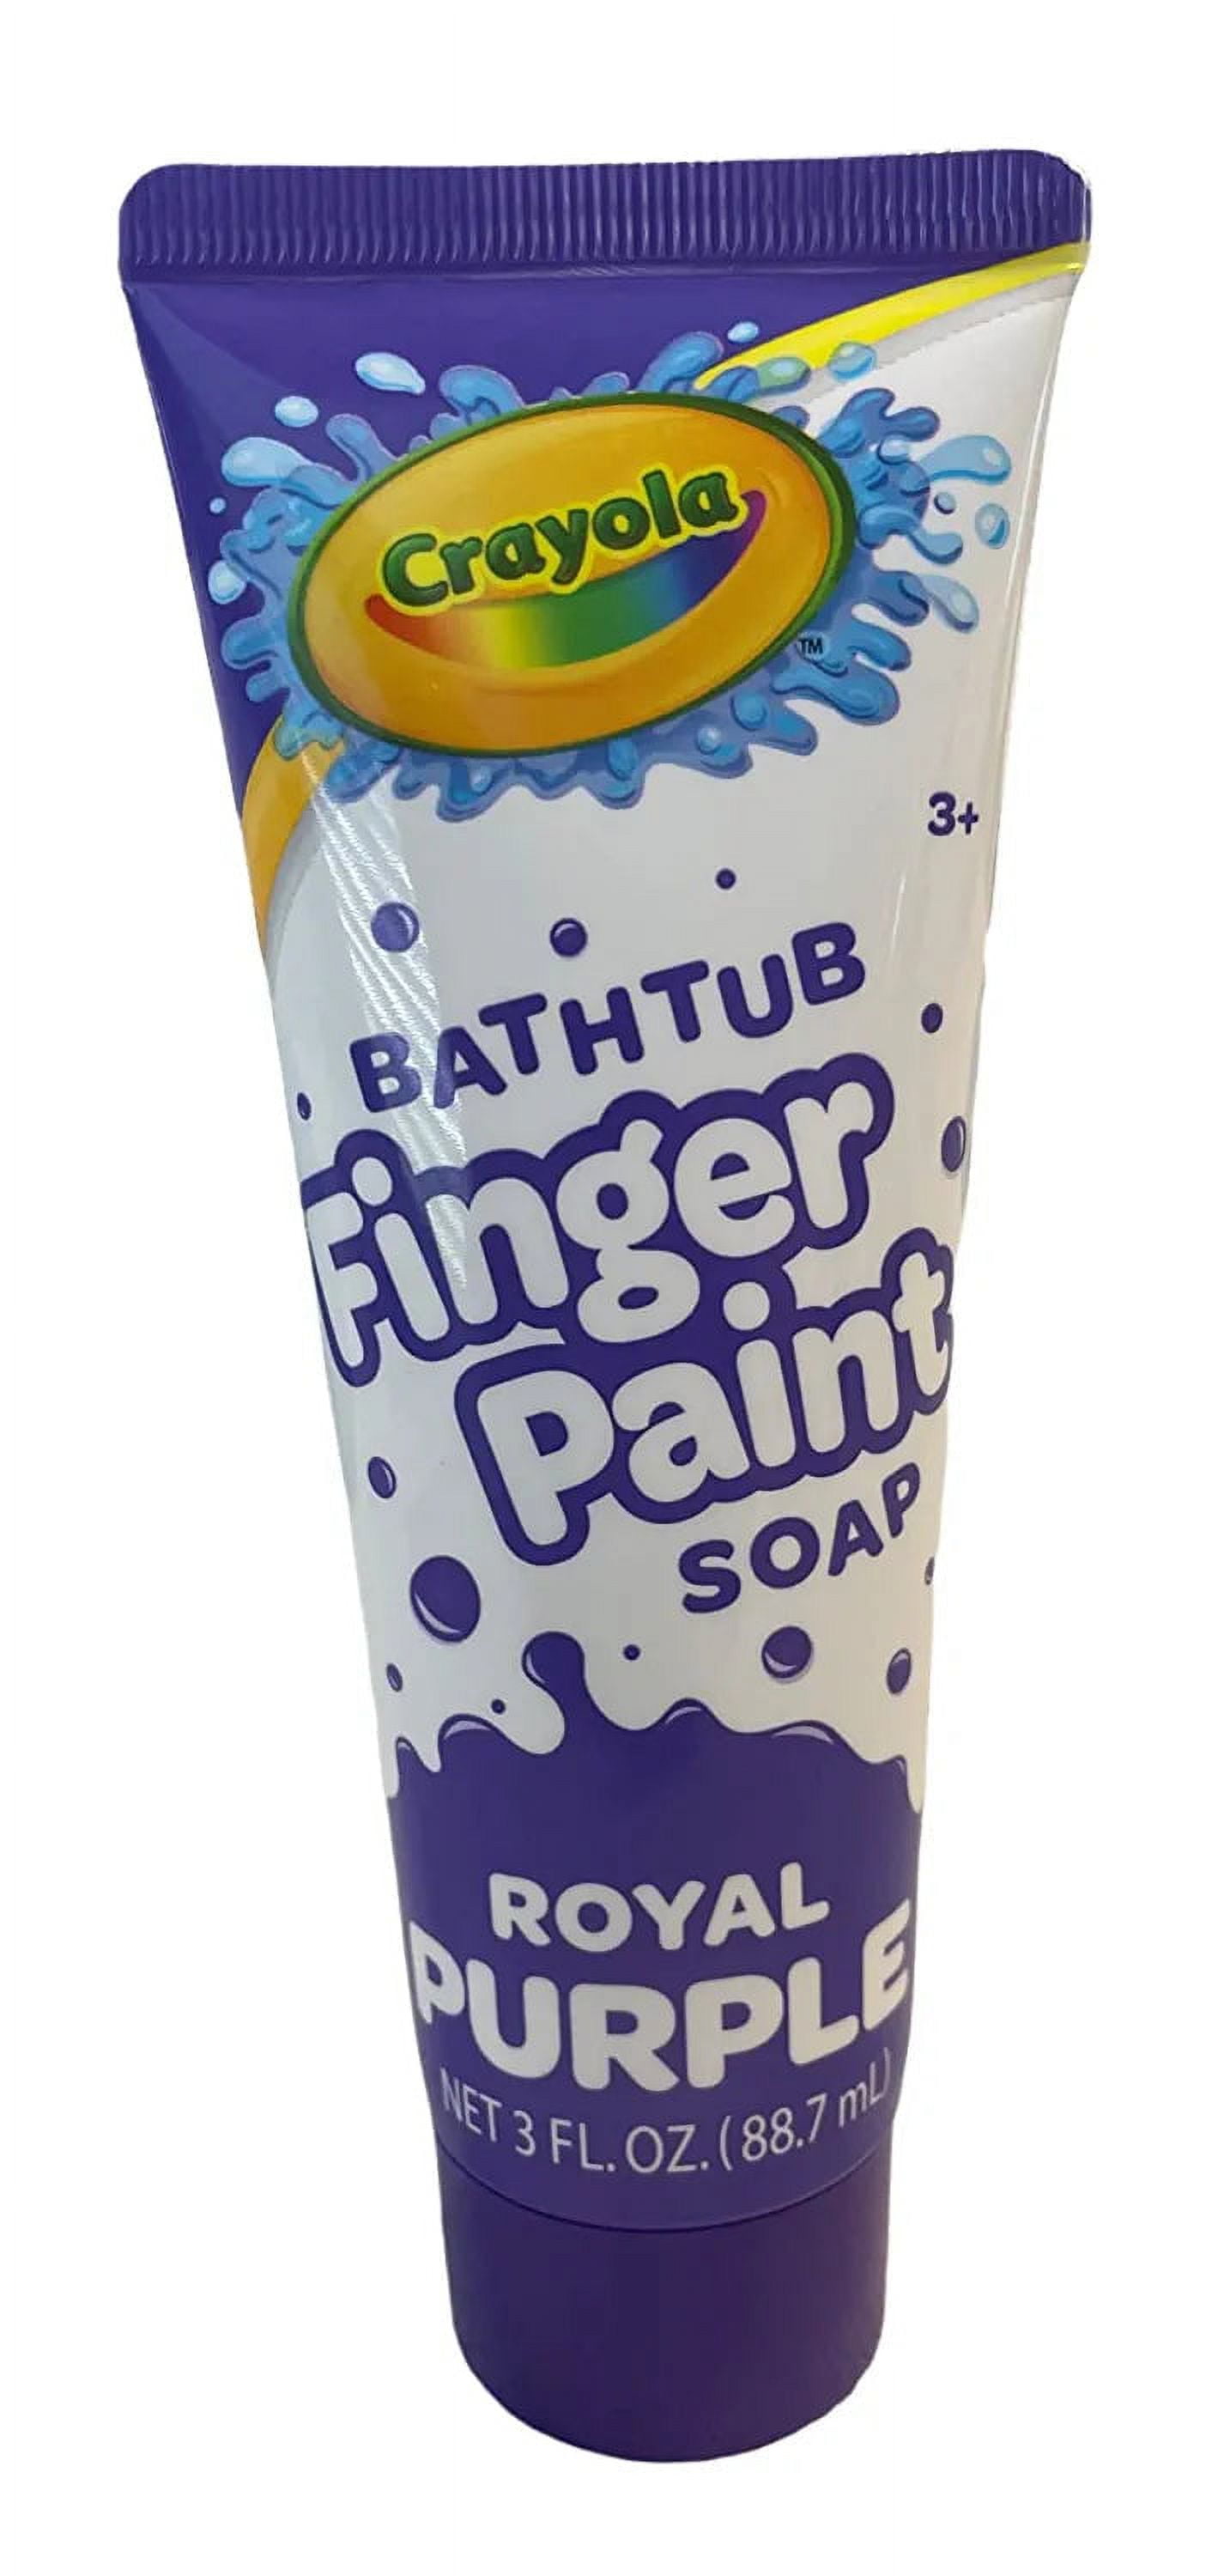 Crayola Bathtub Finger Paint Soap - Pastel Blue - 3 oz